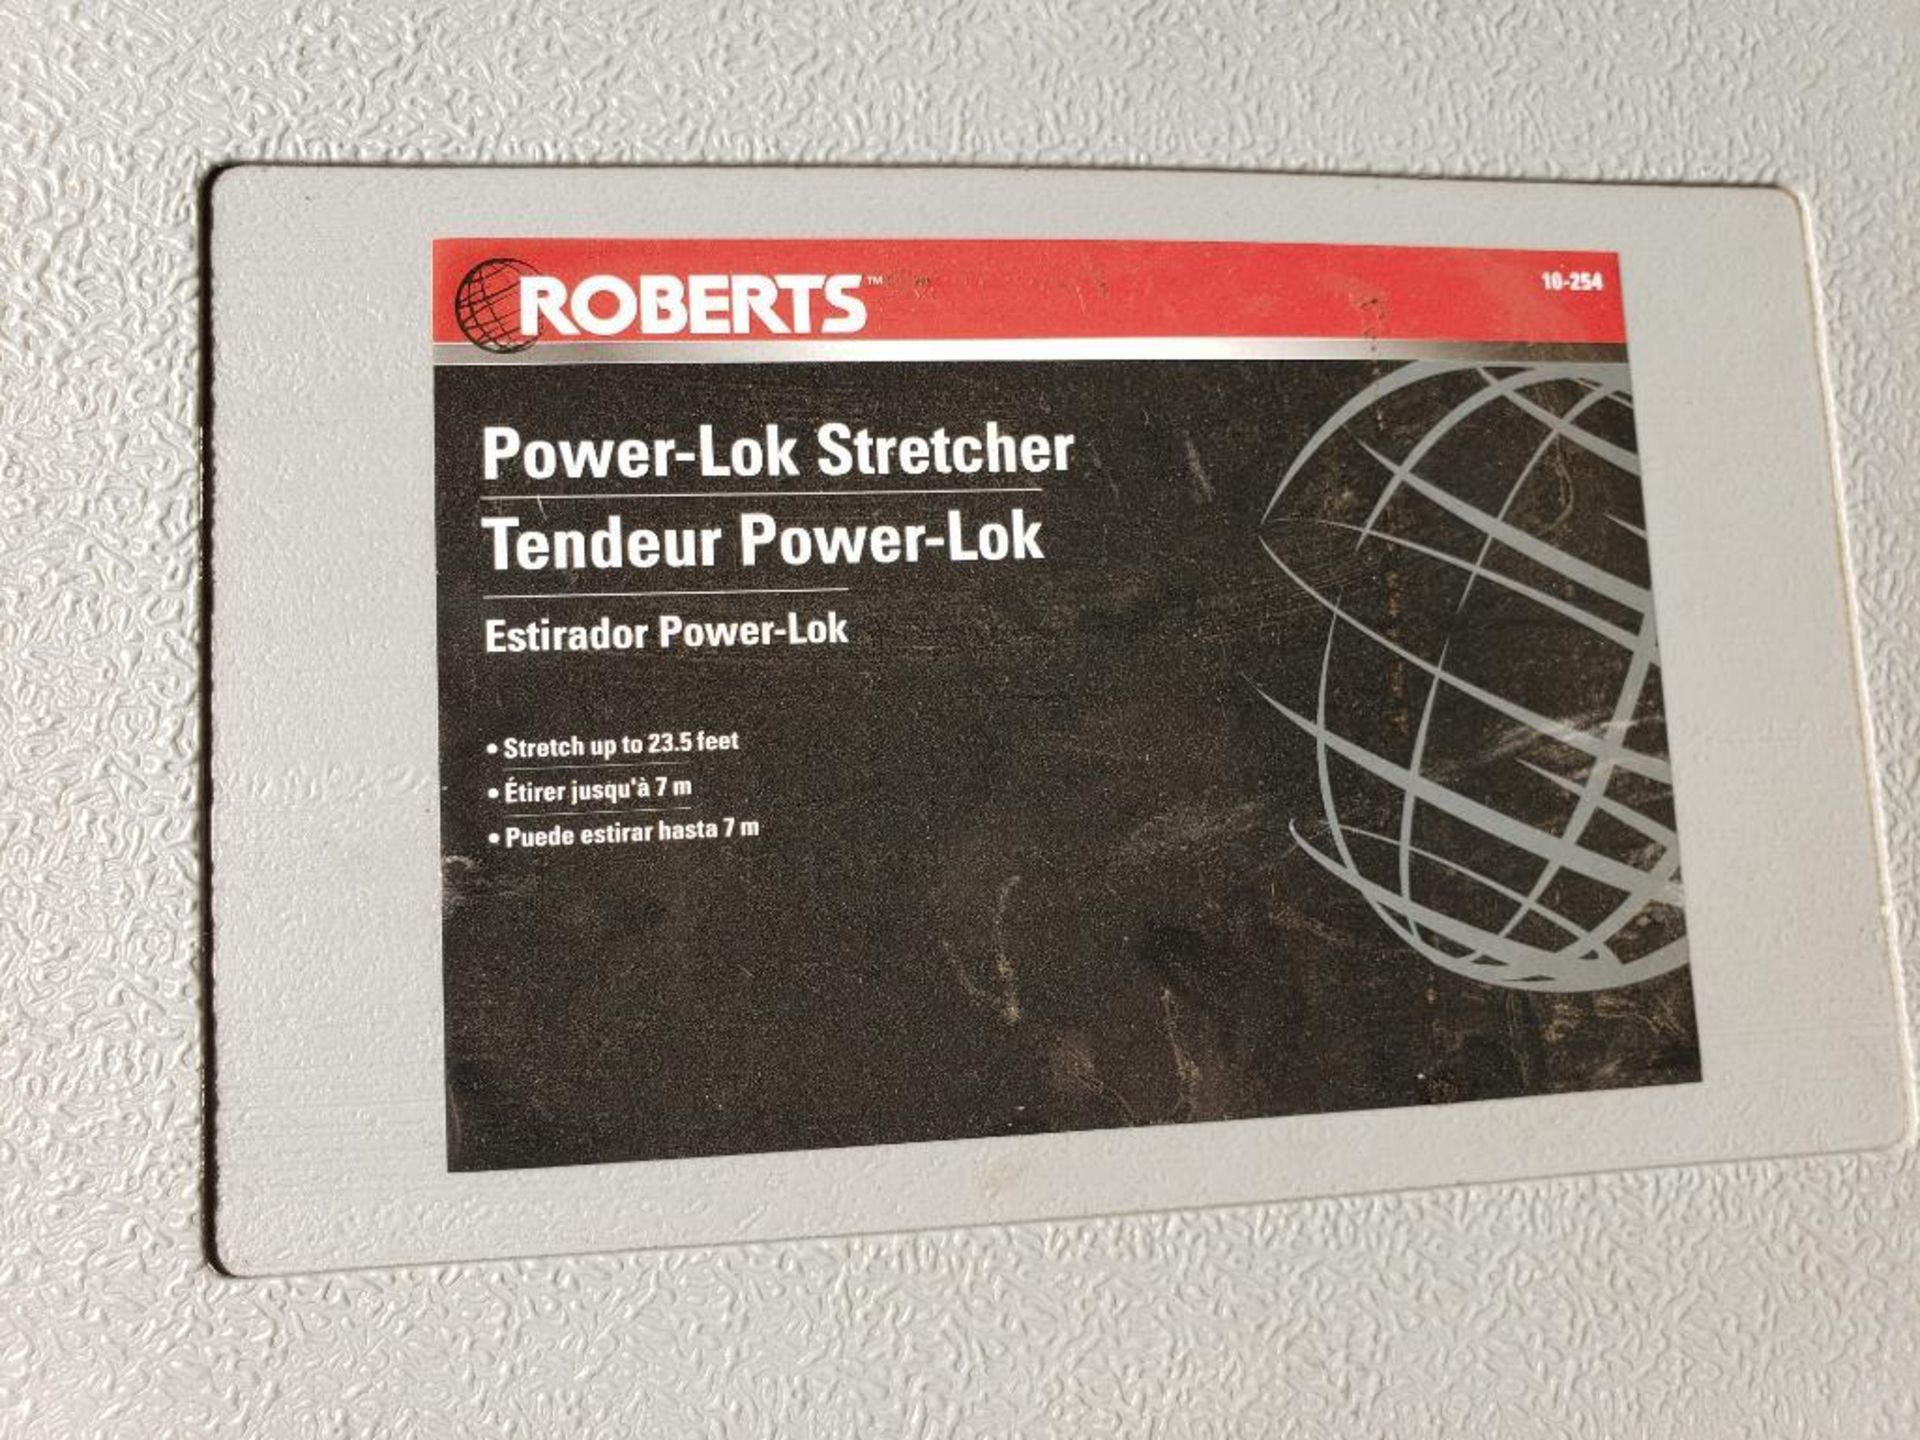 Roberts Power-Lok Stretcher. 10-254. - Image 8 of 9